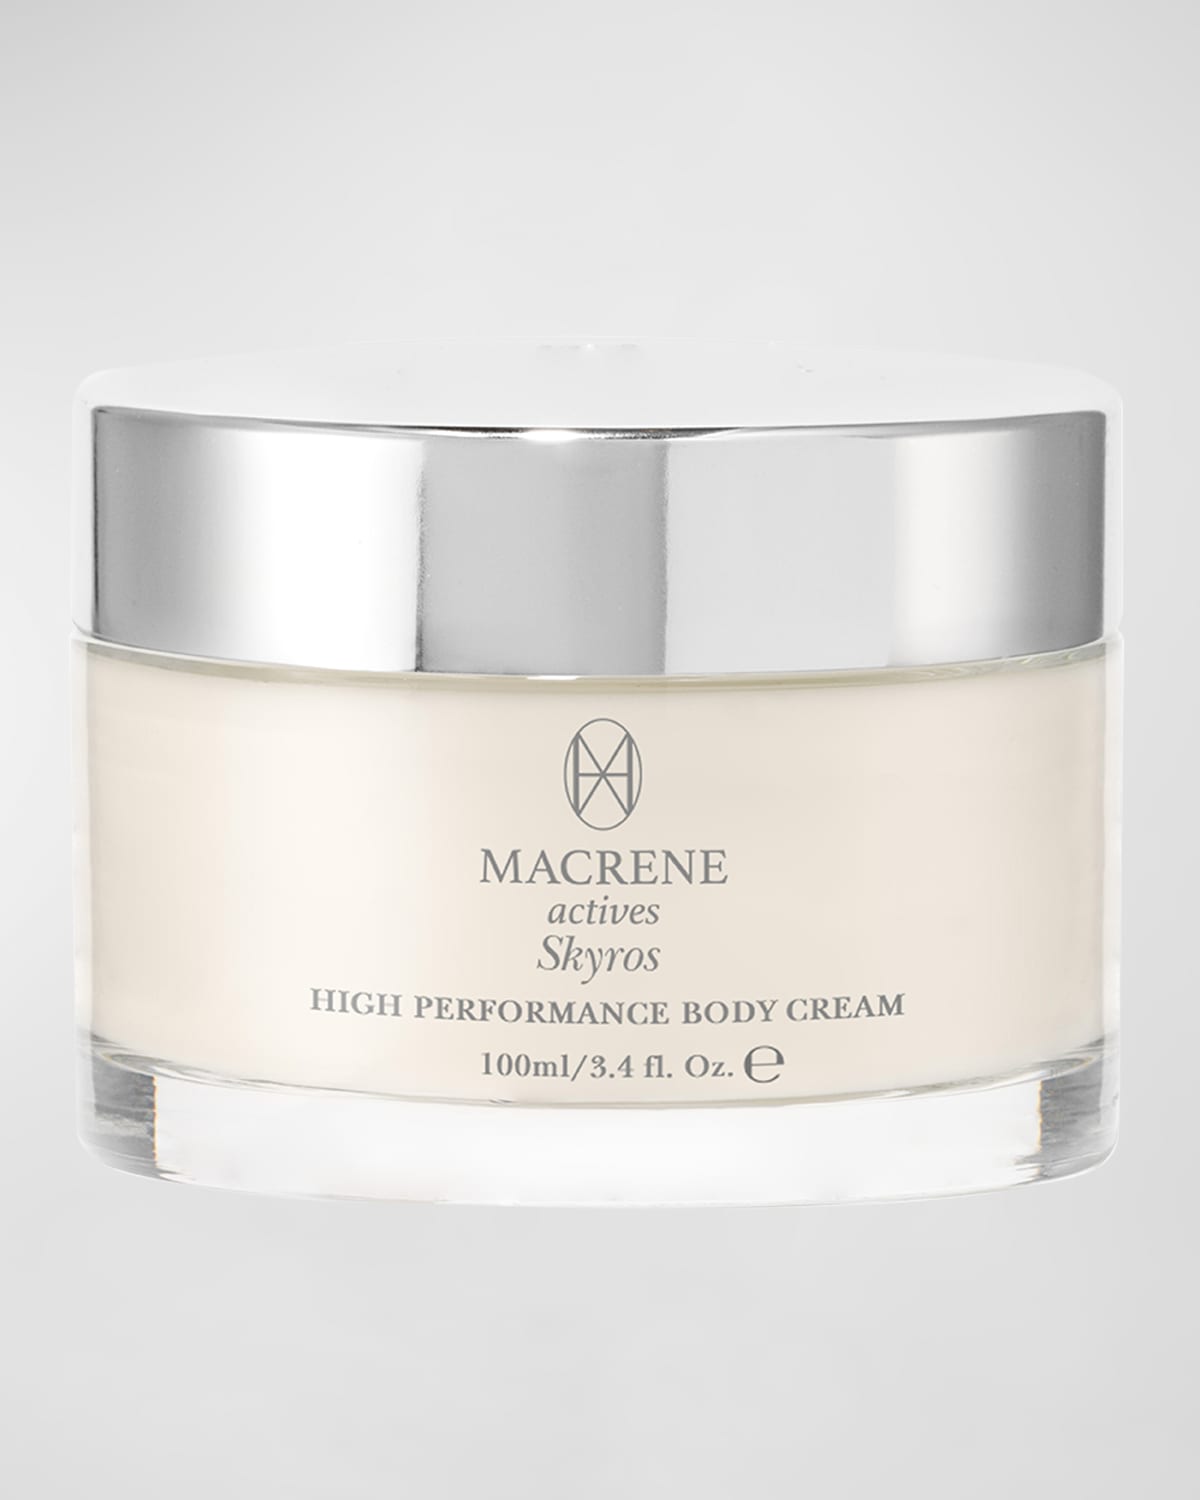 Macrene Actives High Performance Body Cream, 3.4 oz.